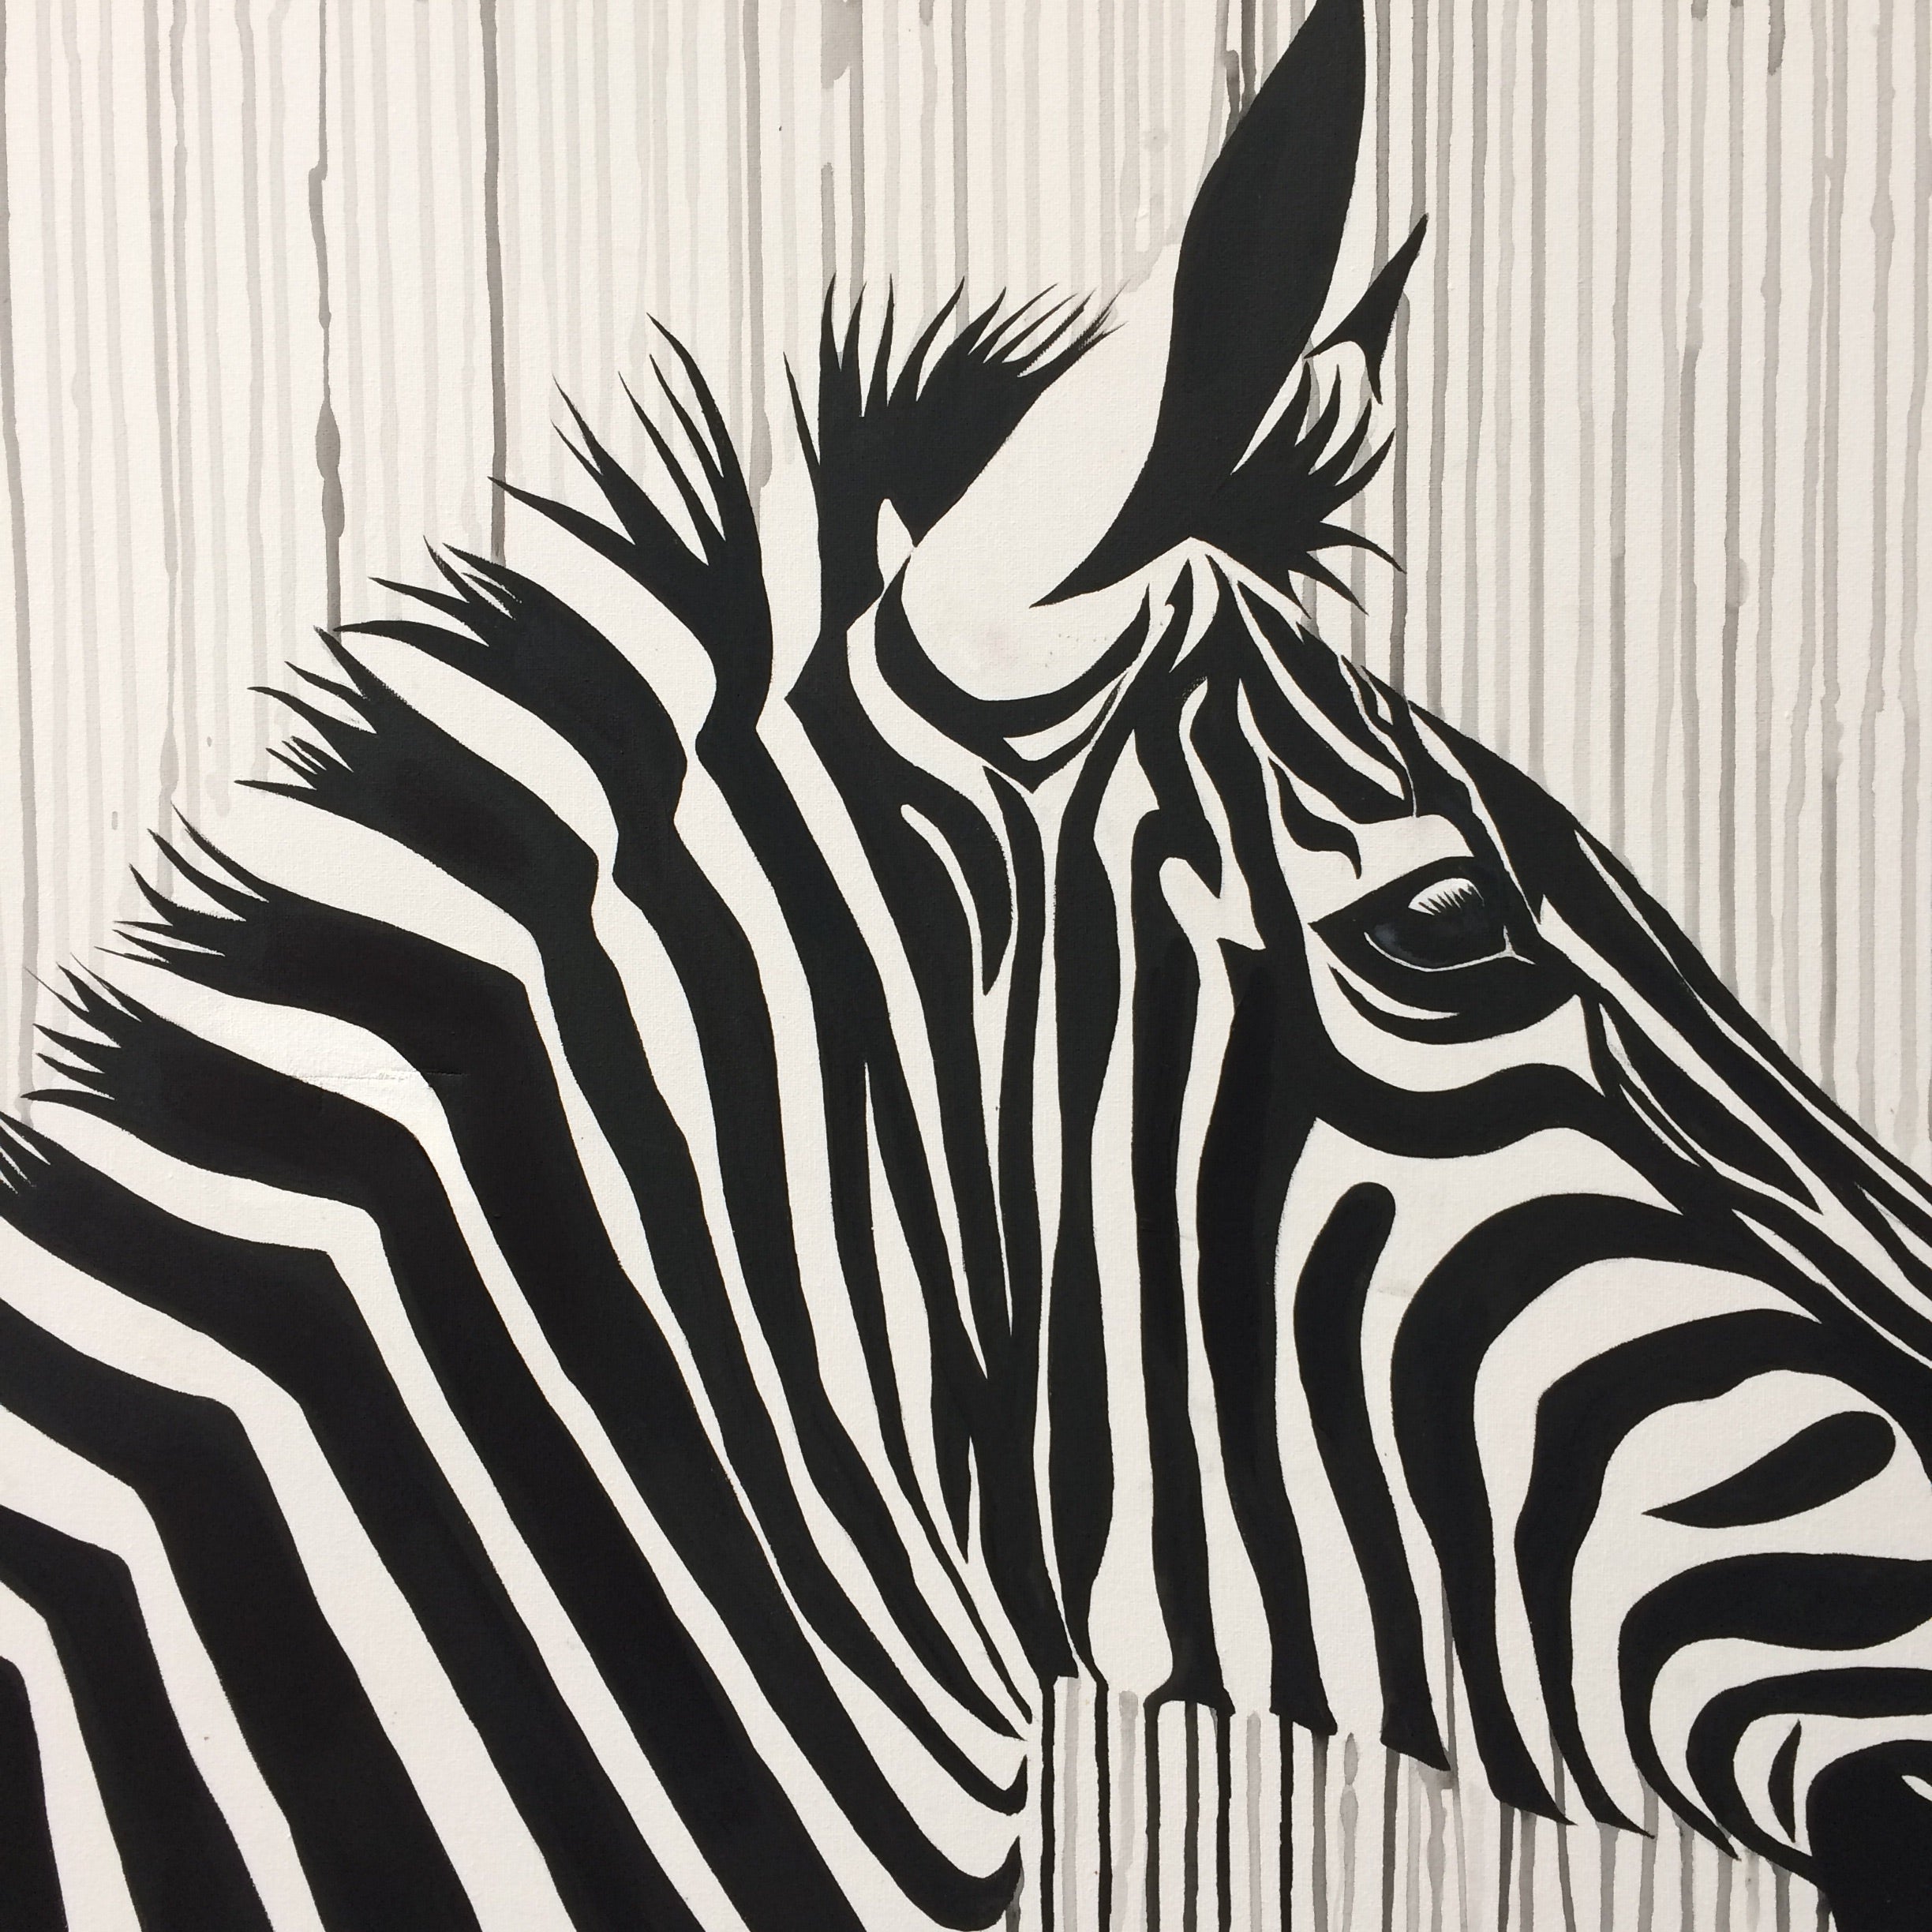 zebra horse sophie long art original sale 